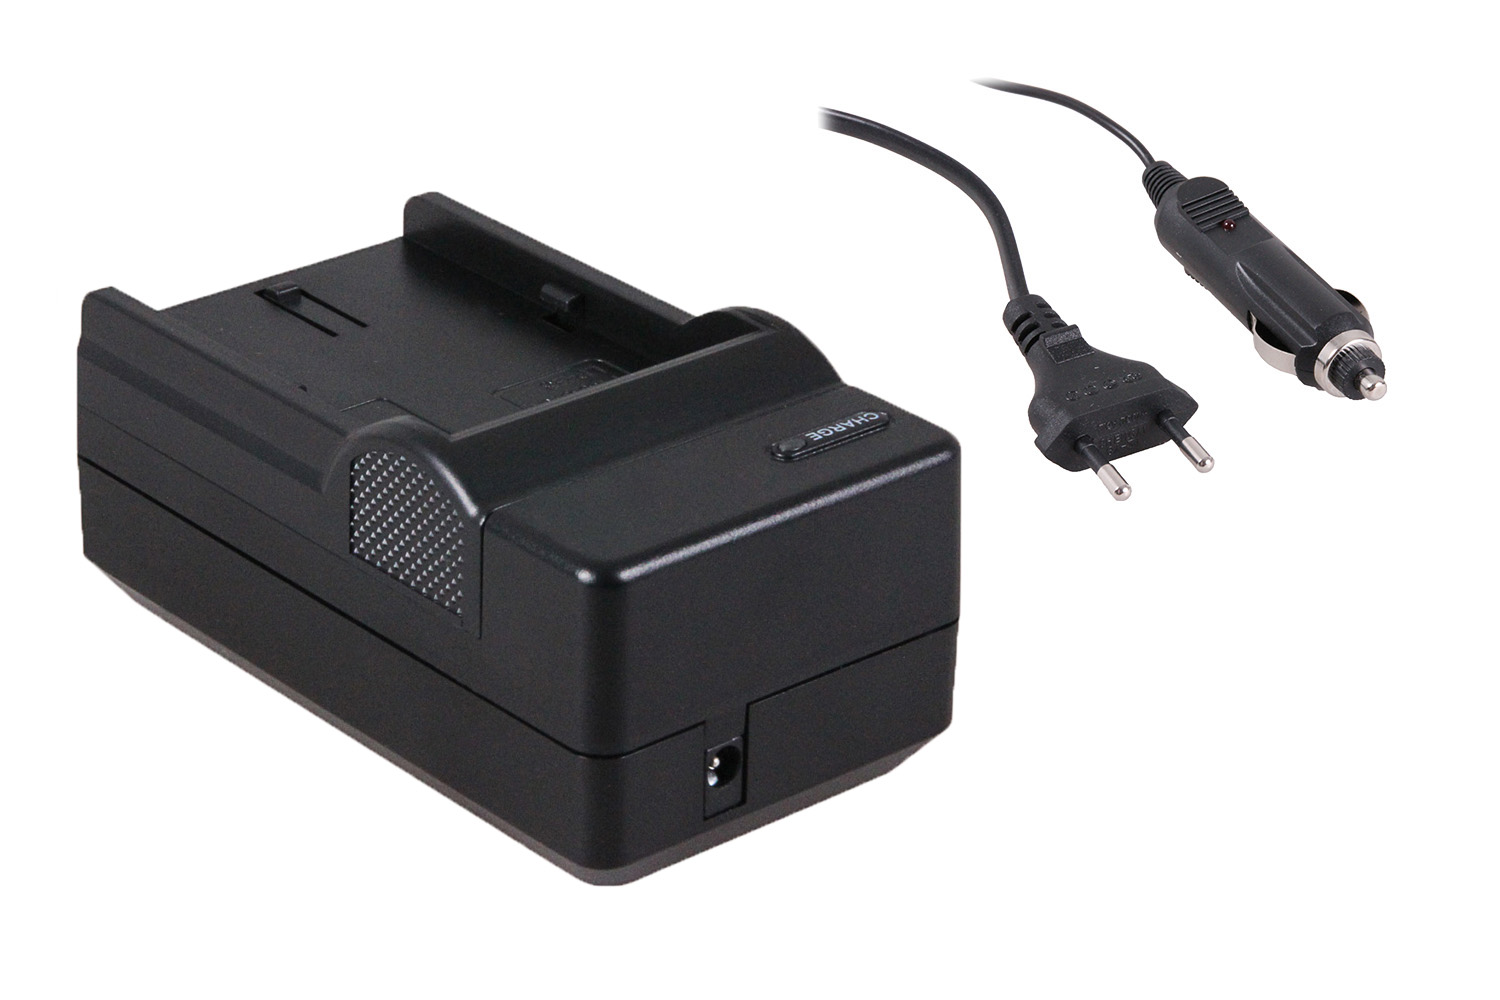 Chargeur allume-cigare Jupio 5 ports USB - 5 x 2,4 A - batterie appareil  photo